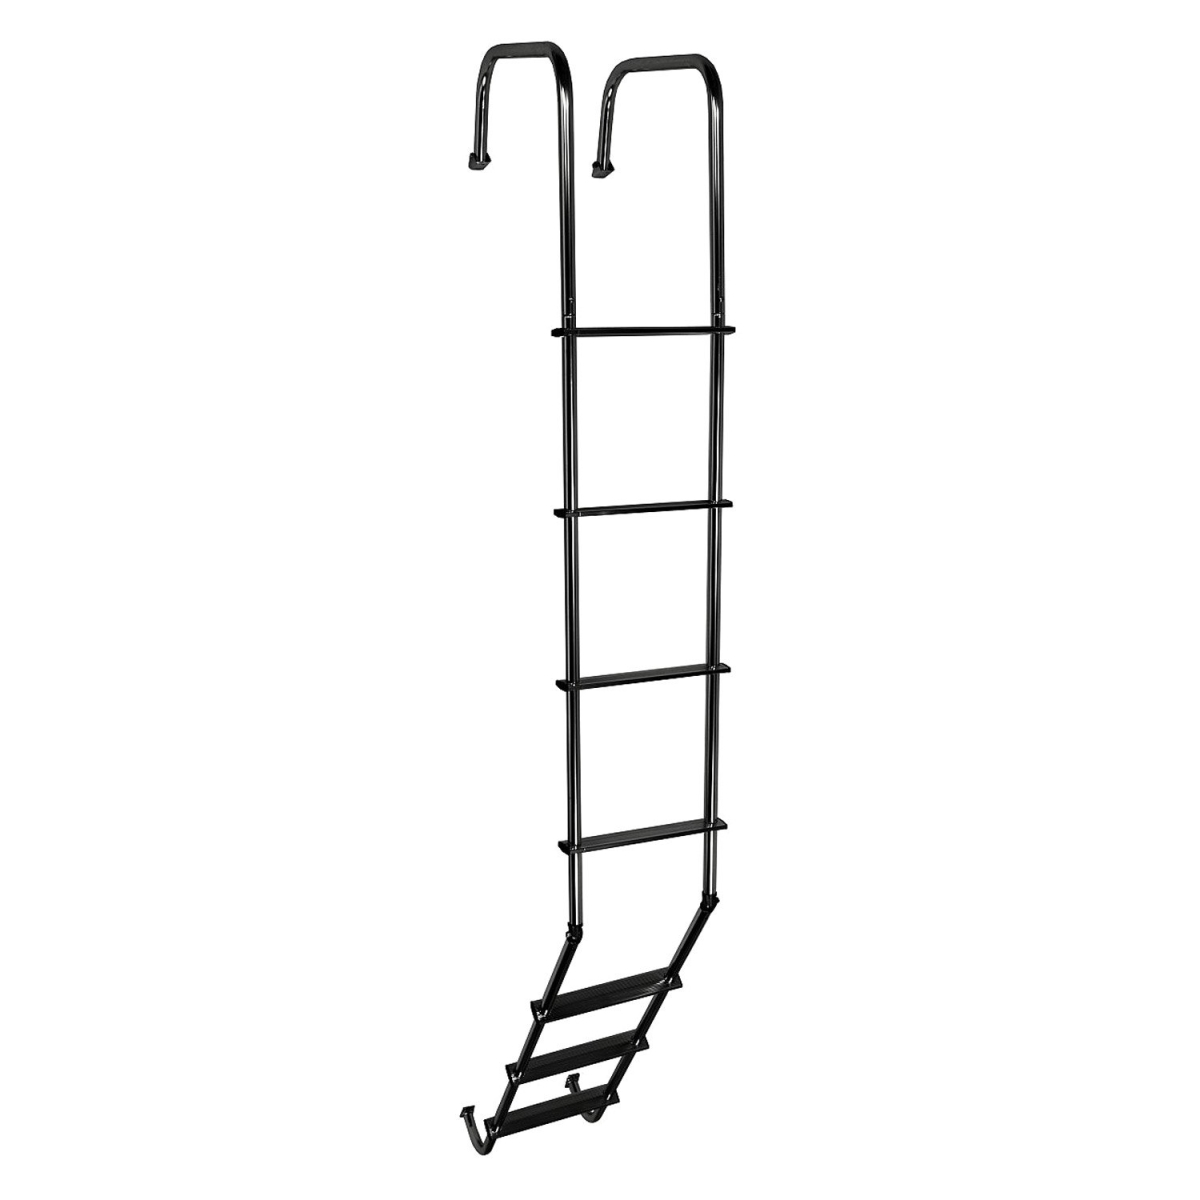 La-401ba Outdoor Rv Ladder Universal Ladder - Powder Coat Over Anodized Aluminum, Black